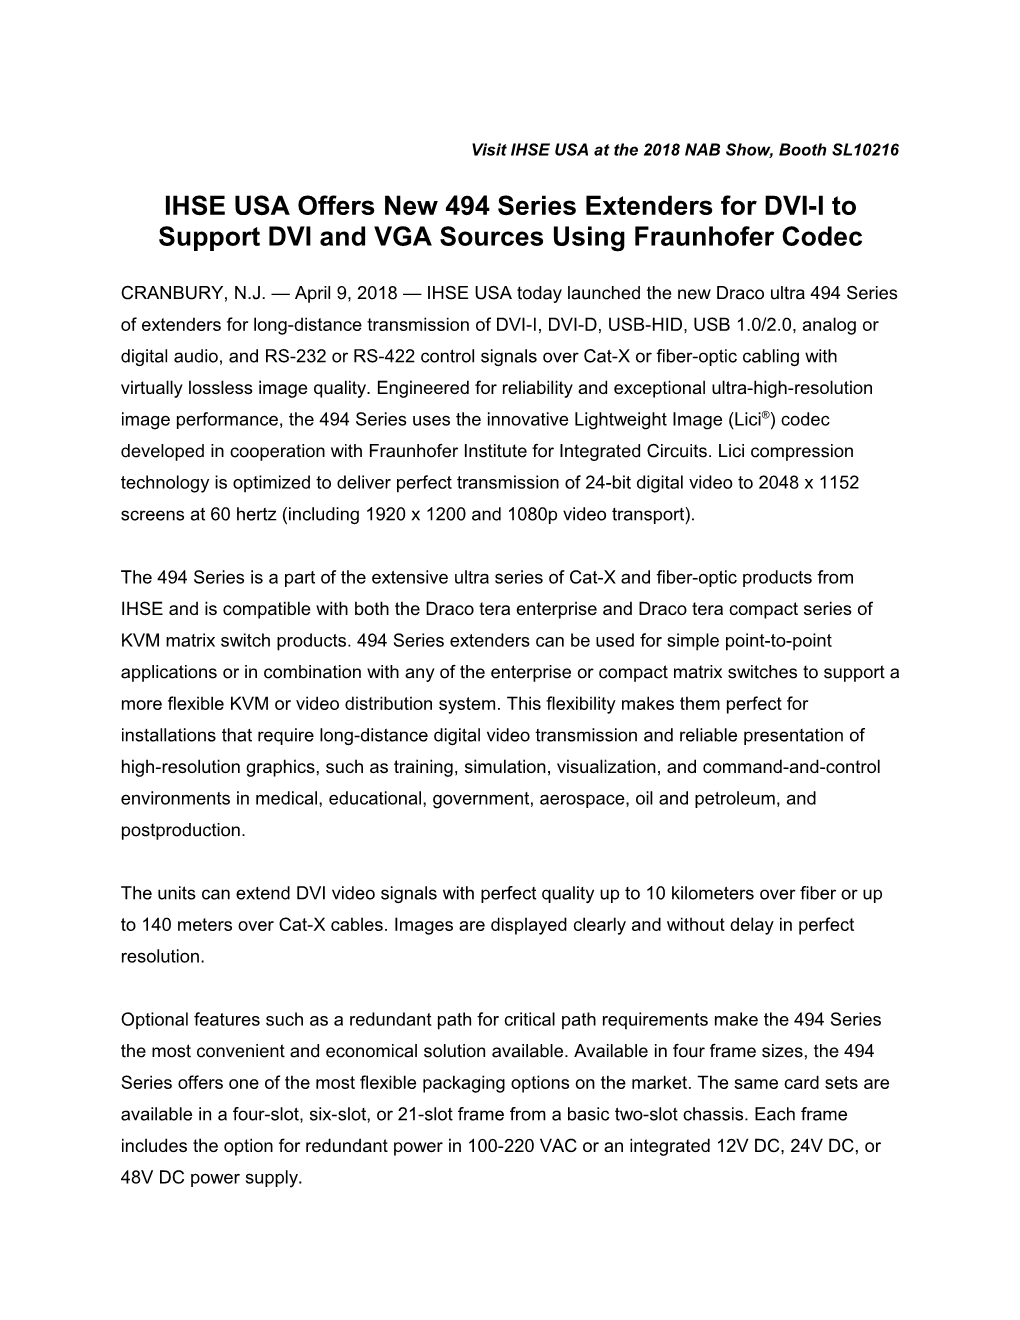 IHSE USA Press Release